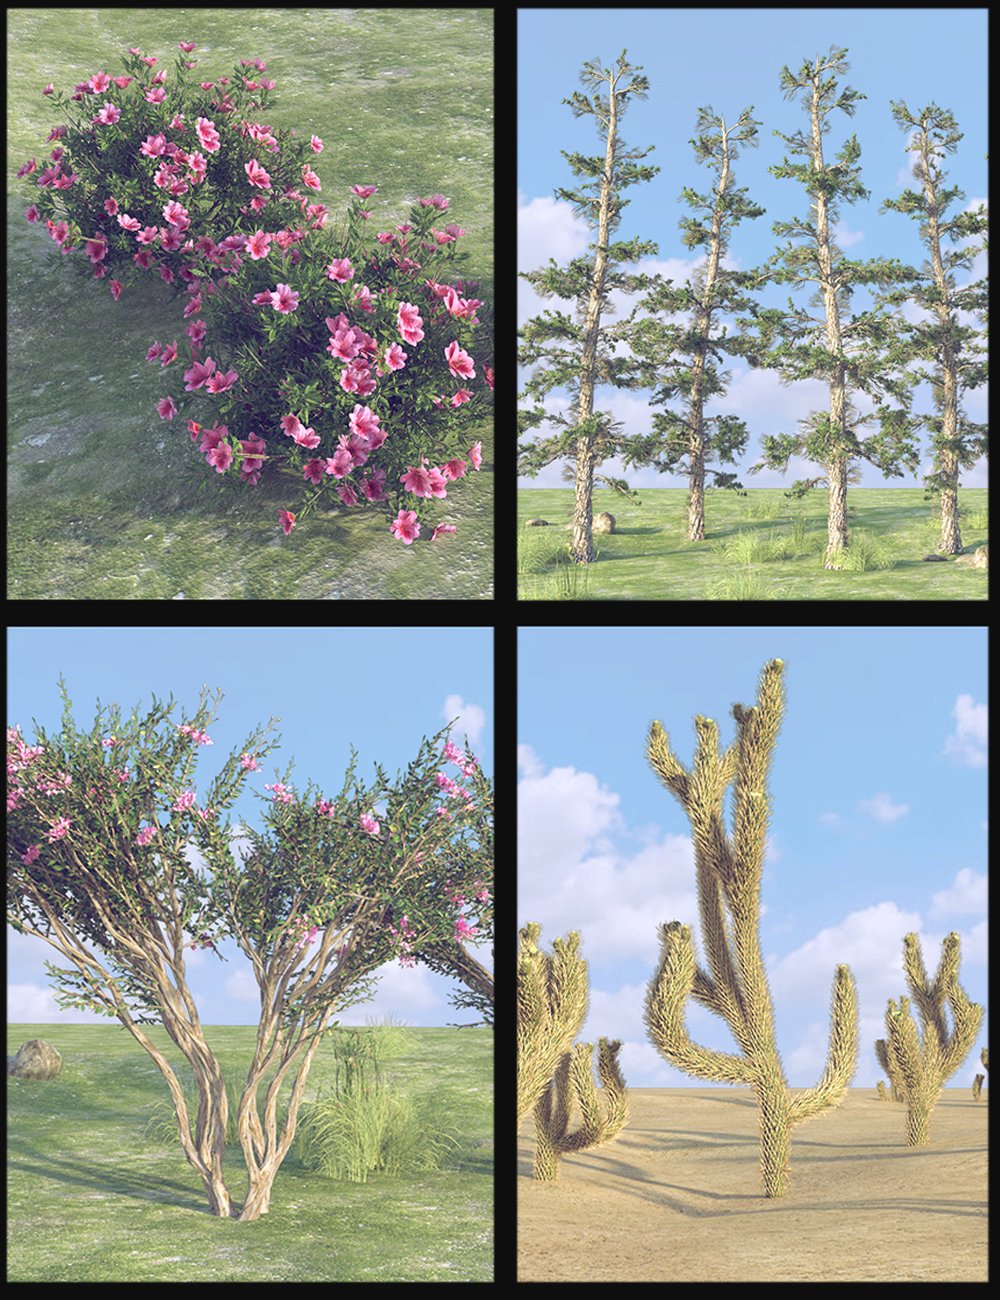 Nature Plants 06 by: Polish, 3D Models by Daz 3D